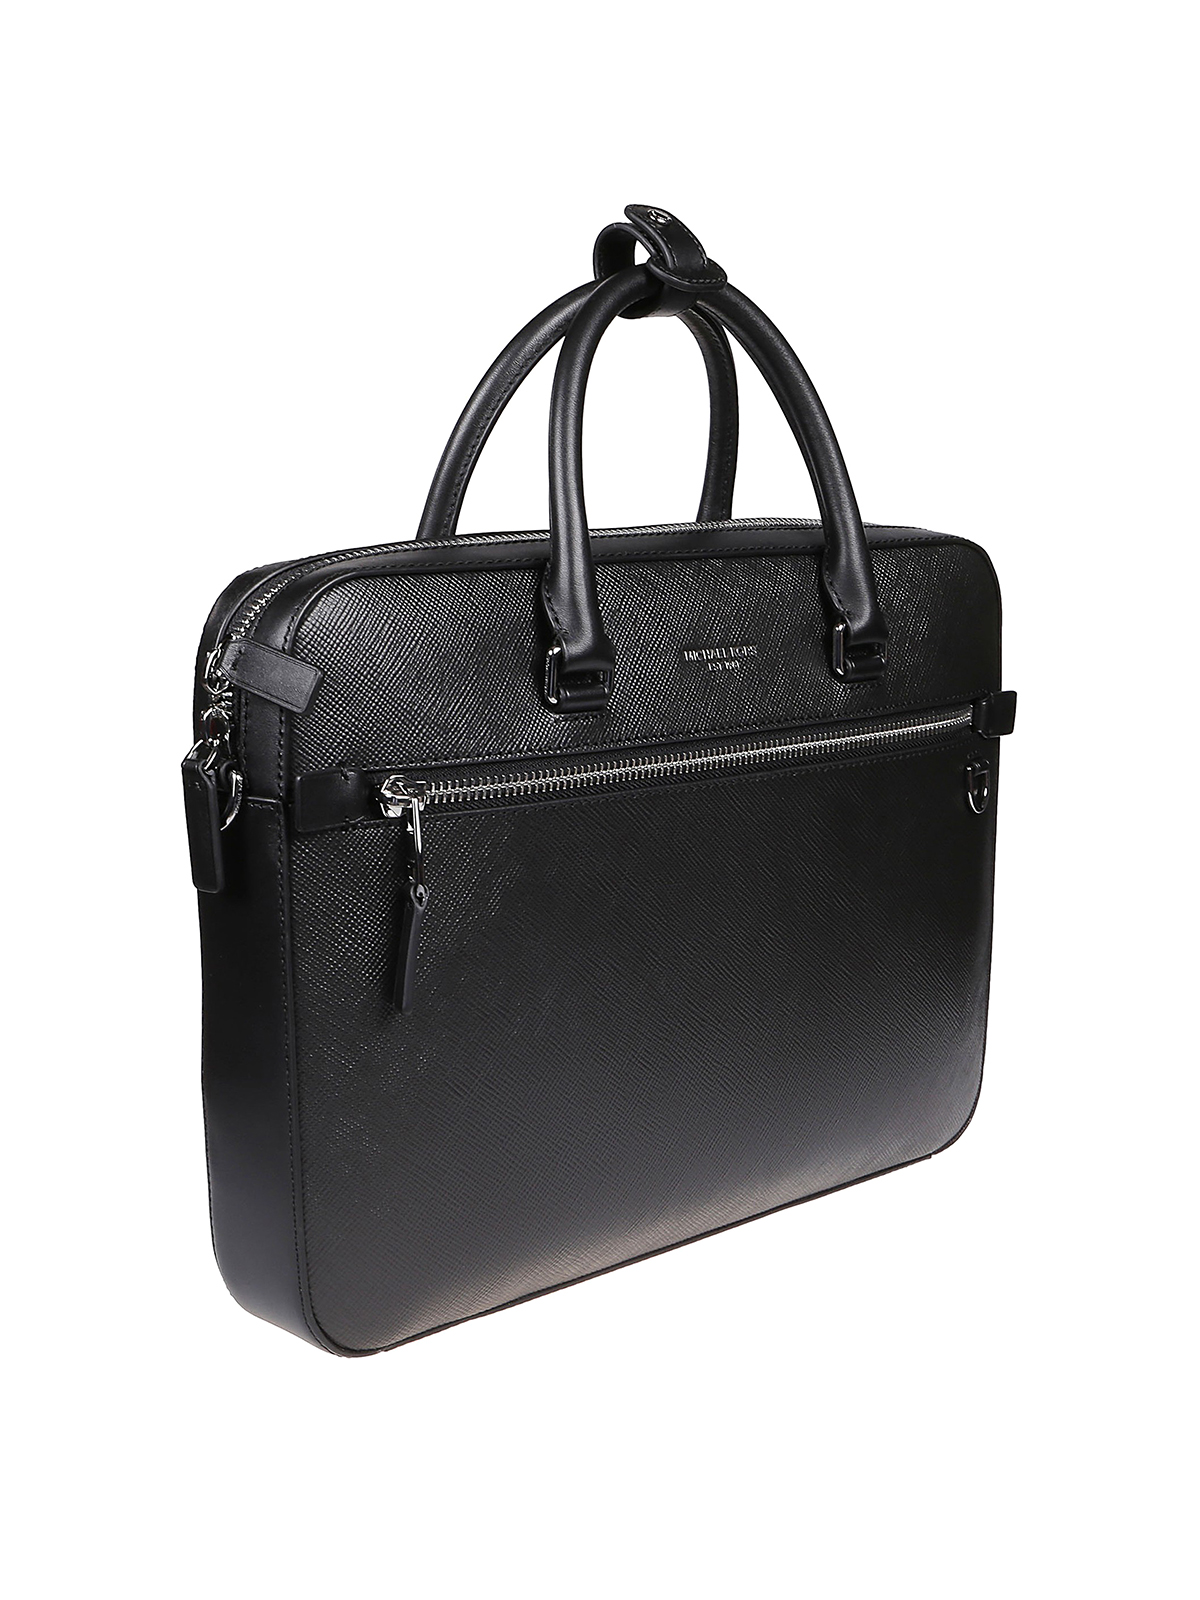 michael kors laptop handbag on sale